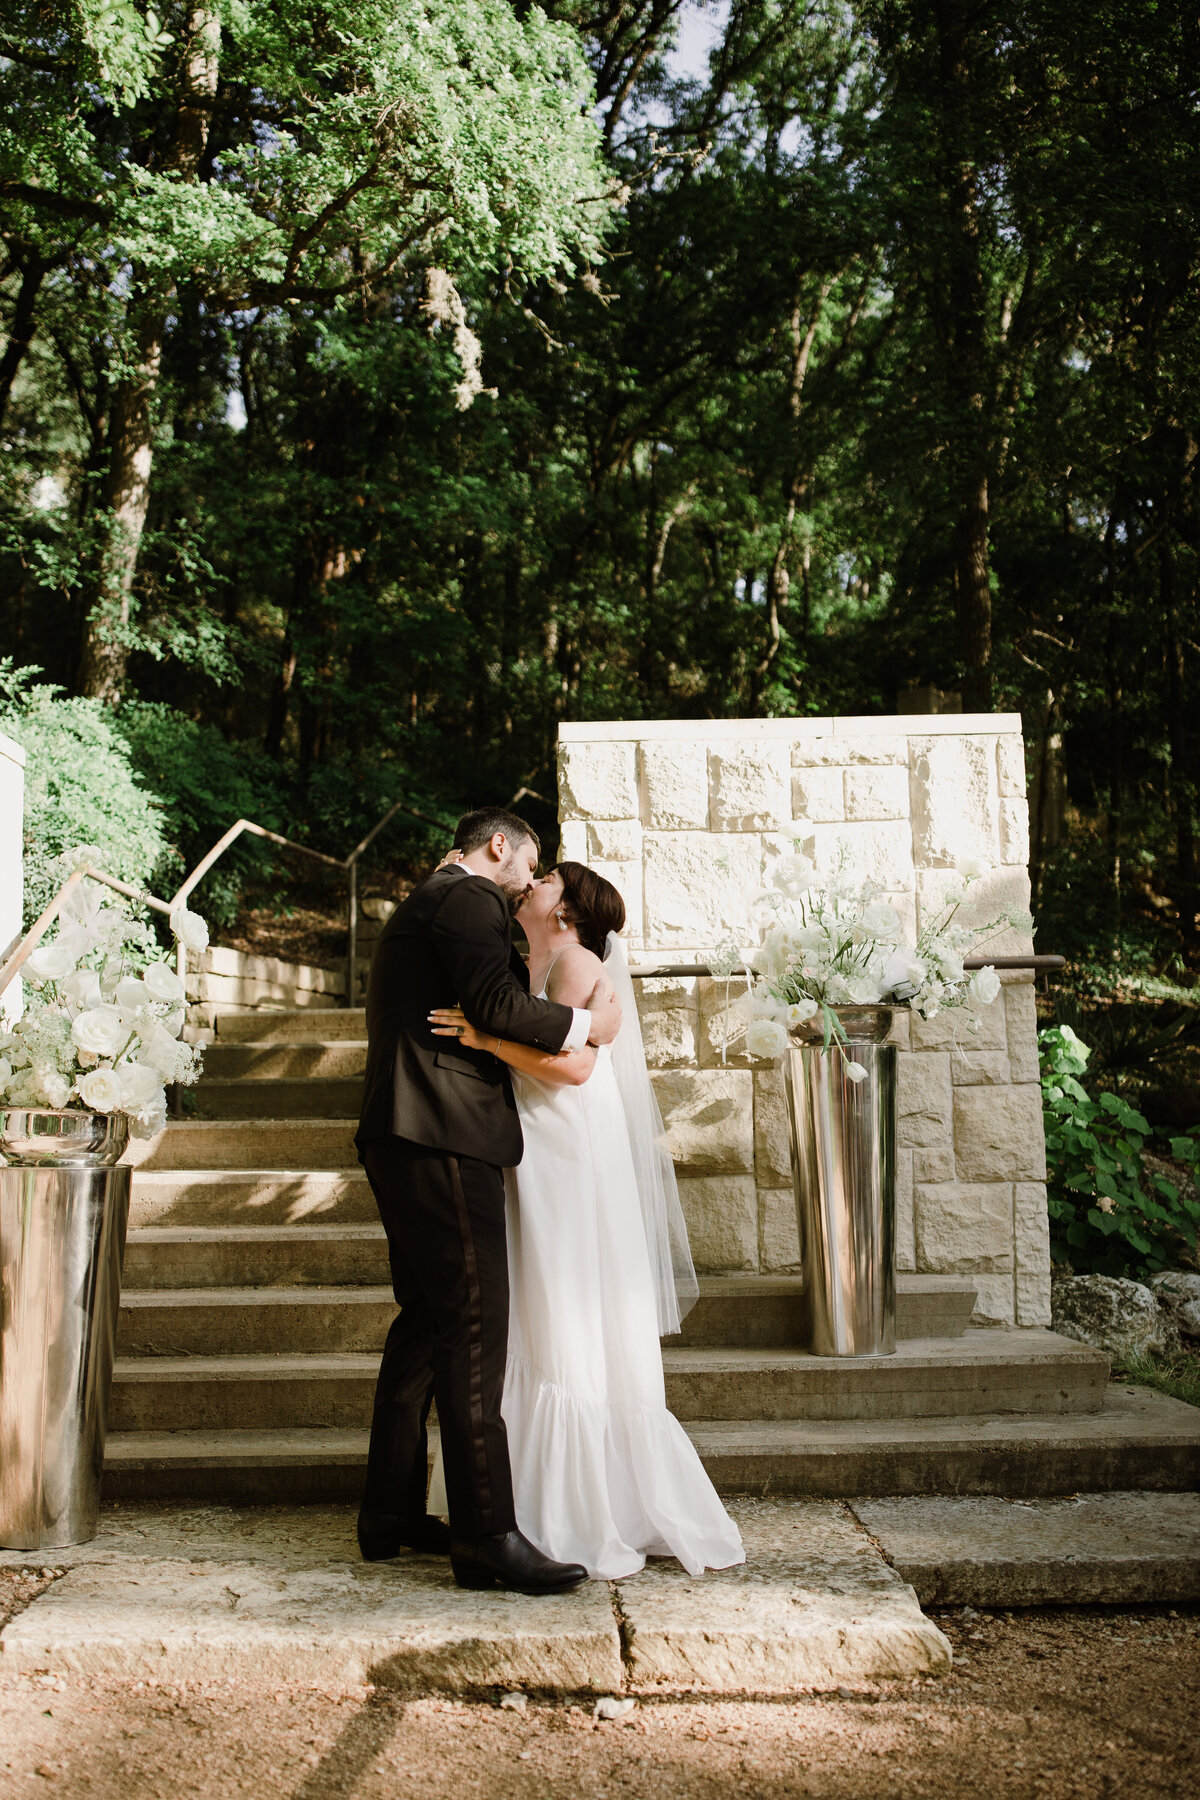 Bride and groom kissing at outdoor wedding ceremon y at Umlauf Sculpture Garden, Austin